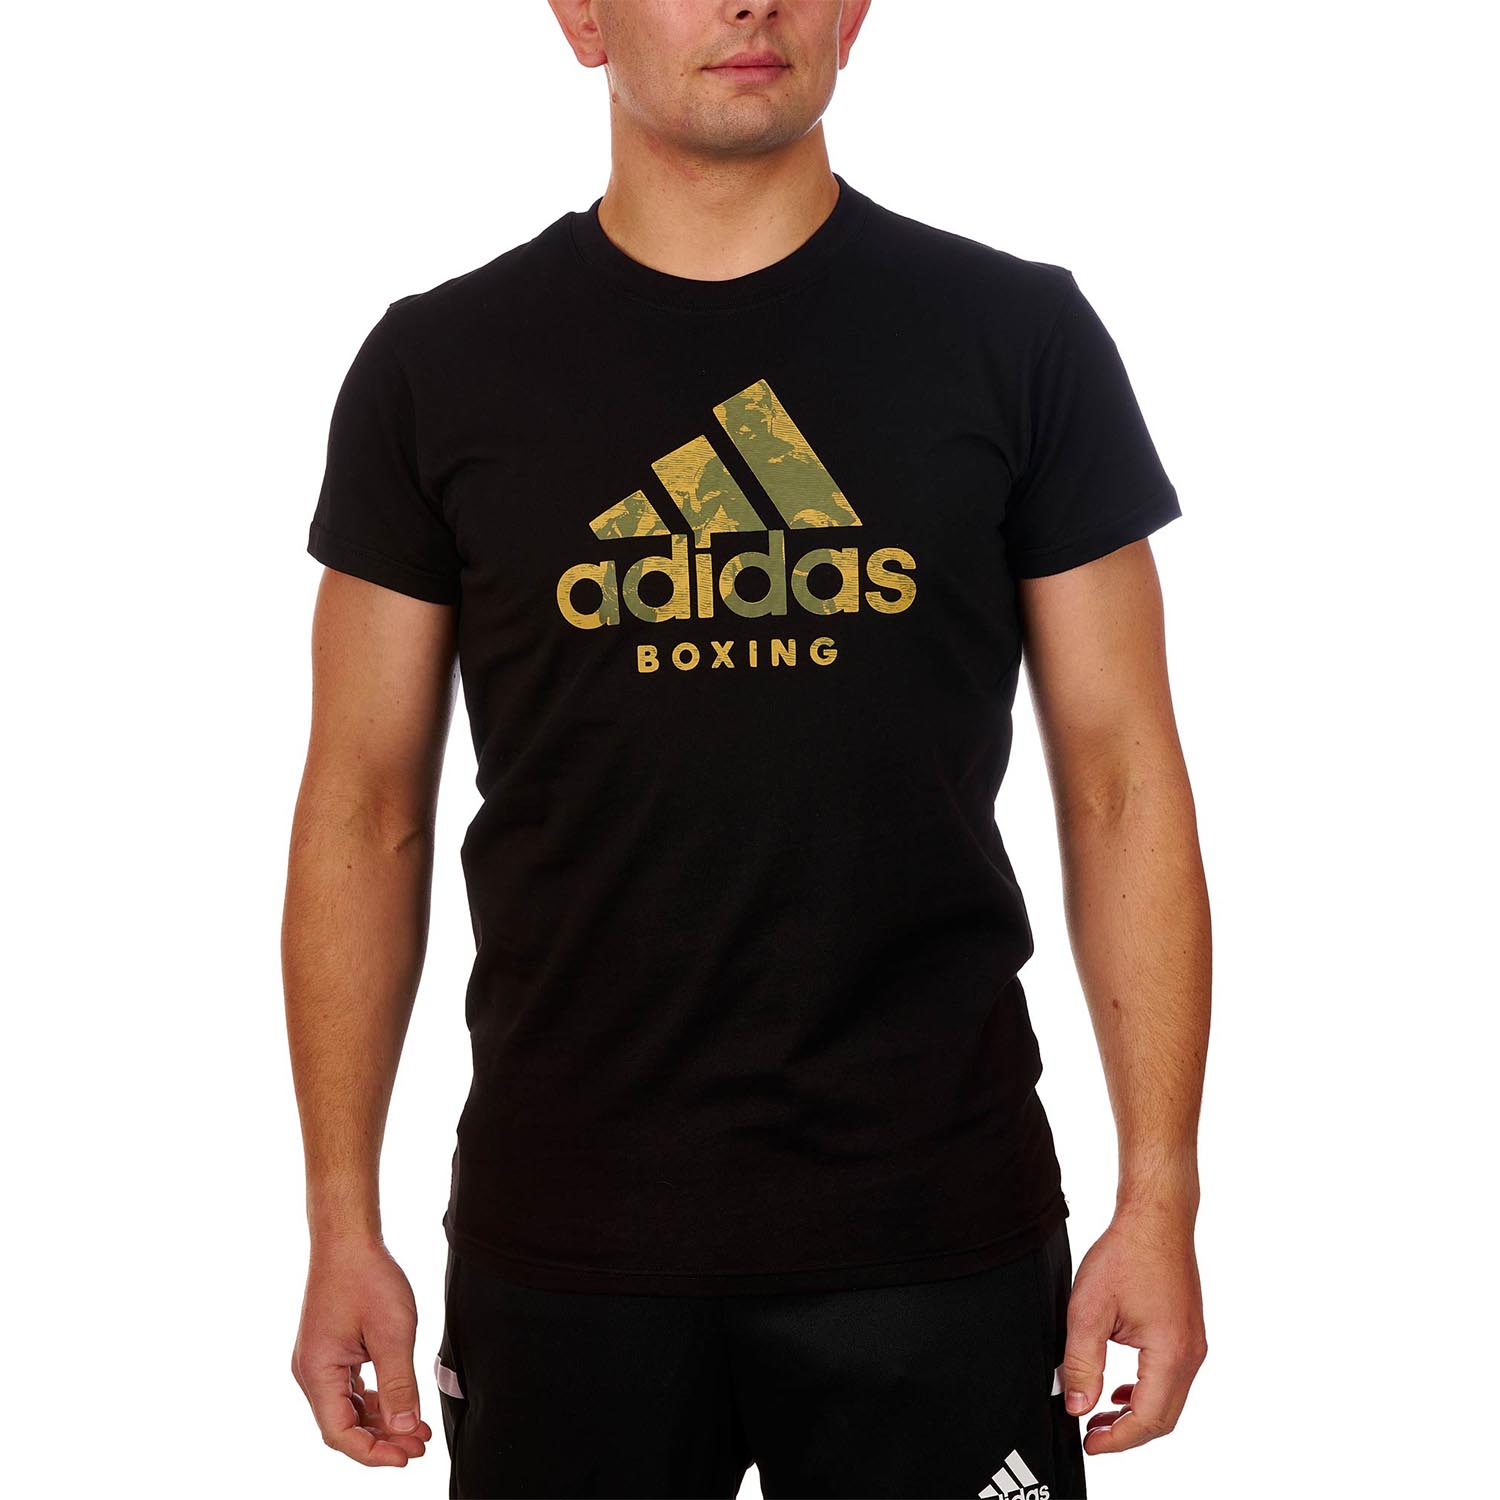 adidas T-Shirt, Badge Of Sport, Boxing, schwarz